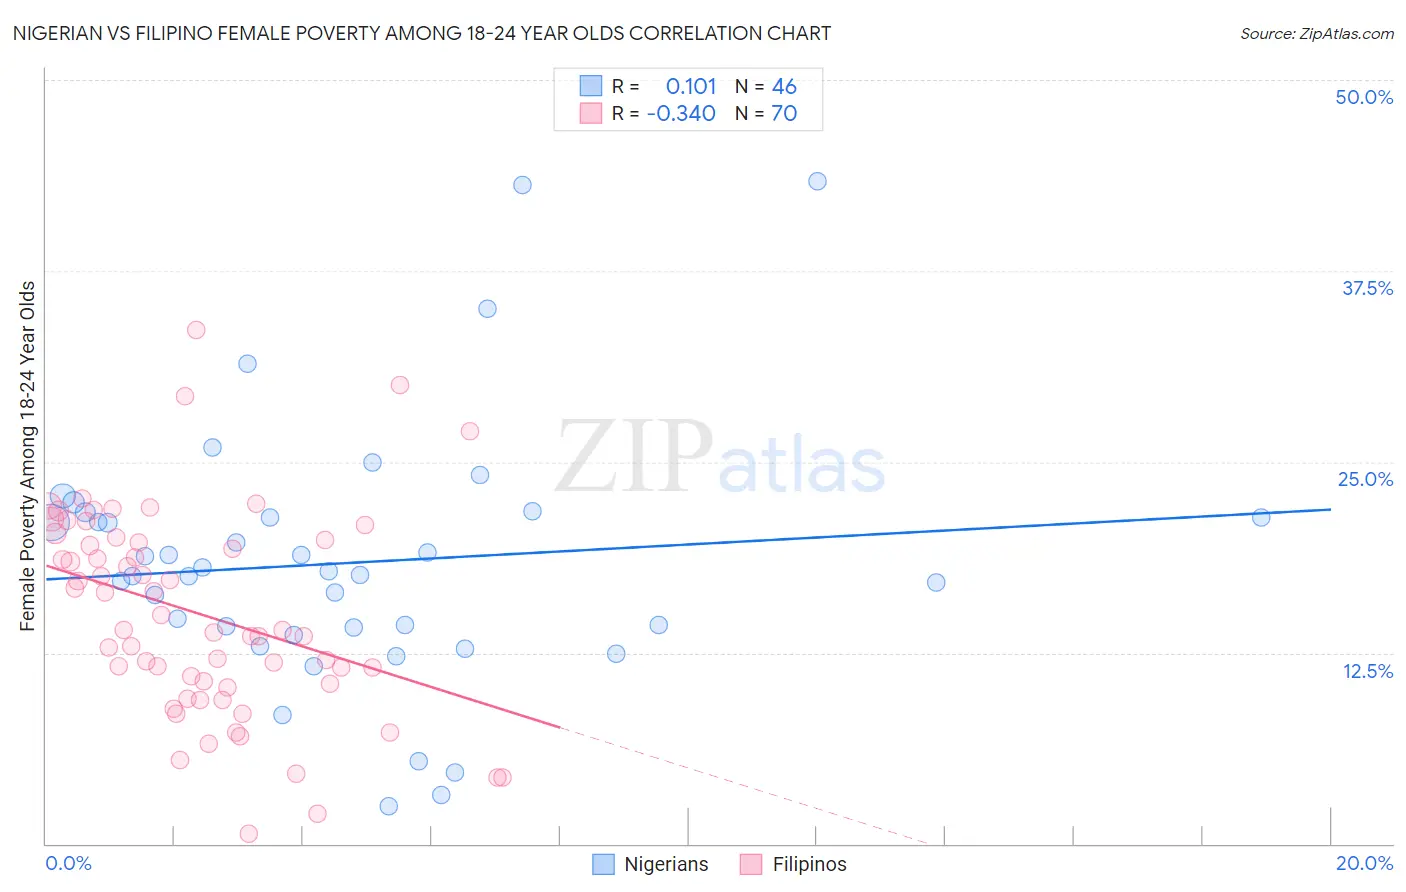 Nigerian vs Filipino Female Poverty Among 18-24 Year Olds